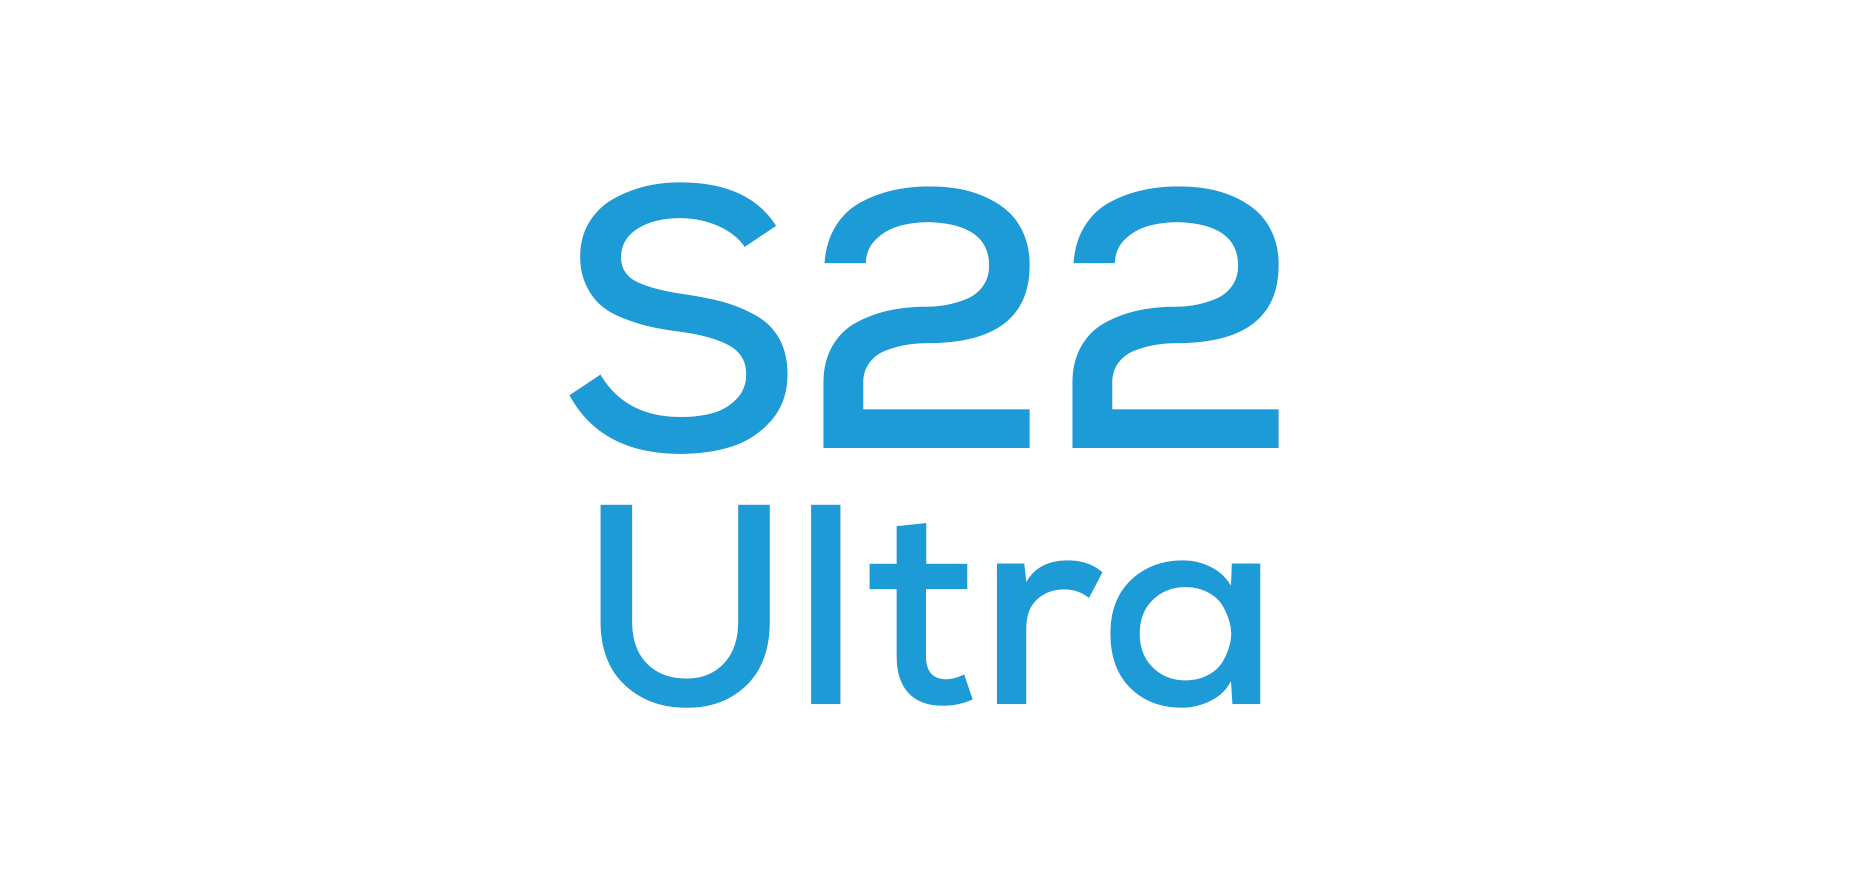 Galaxy S22 Ultra Cases